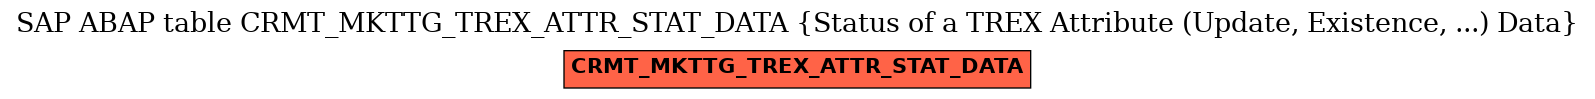 E-R Diagram for table CRMT_MKTTG_TREX_ATTR_STAT_DATA (Status of a TREX Attribute (Update, Existence, ...) Data)